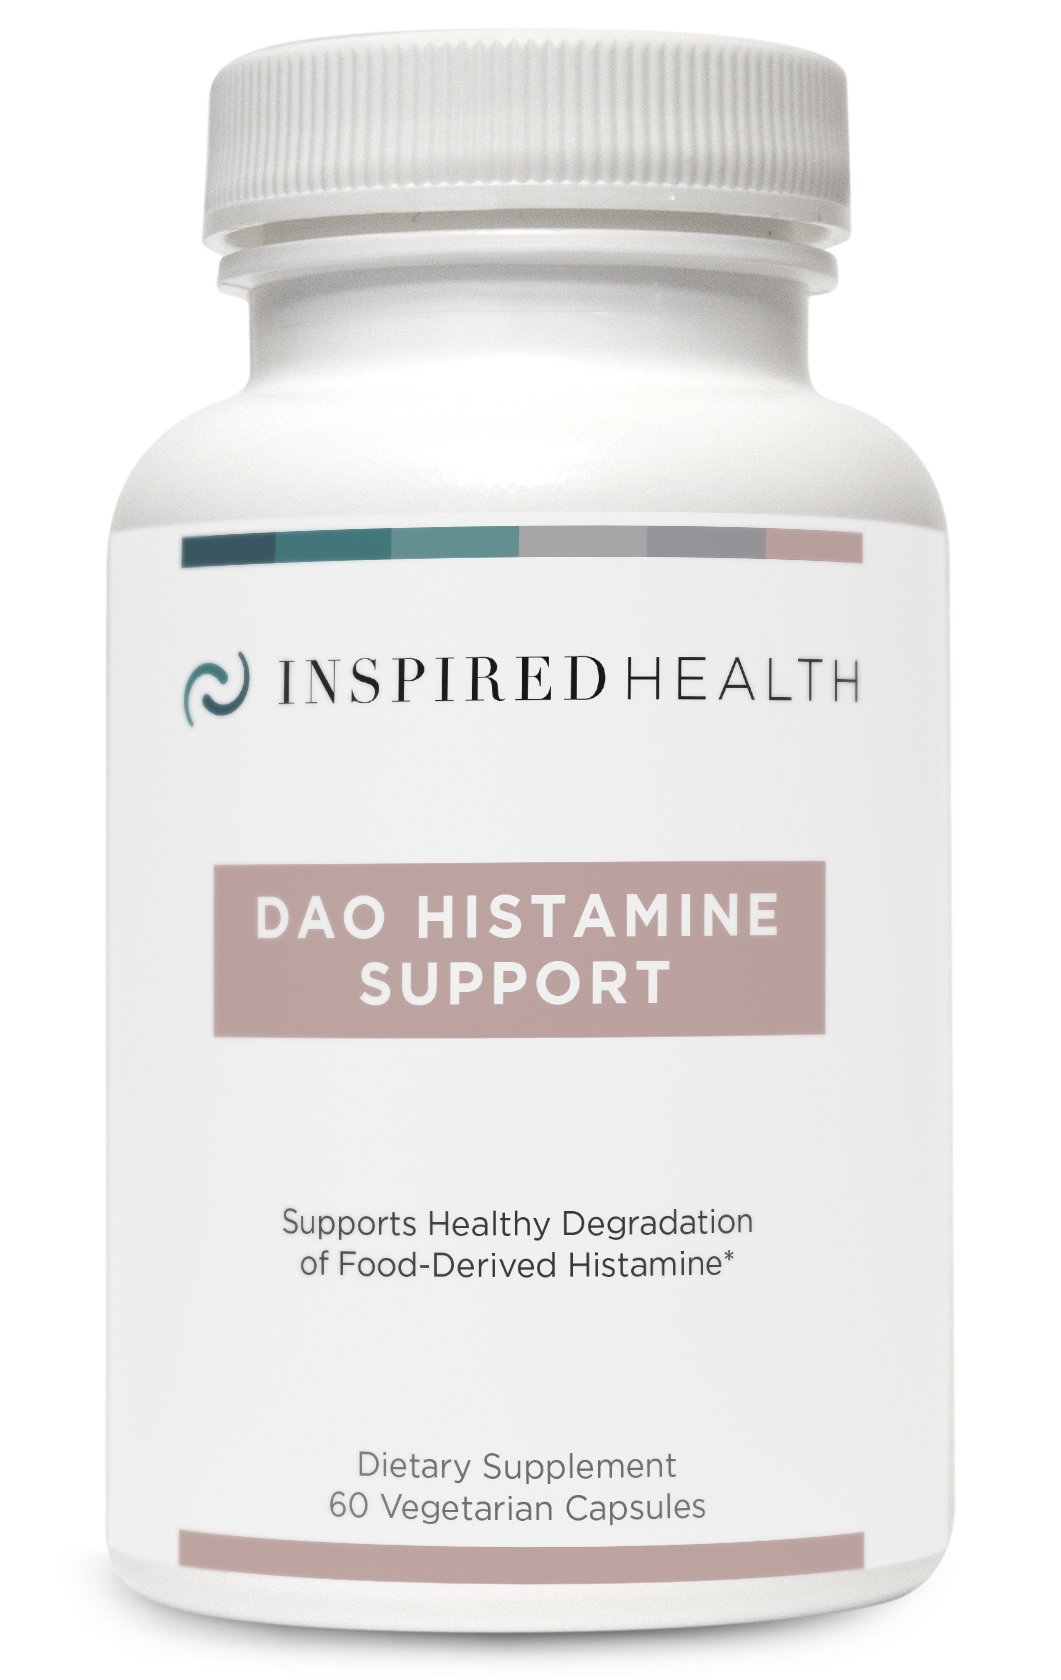 DAO-Histamine Support